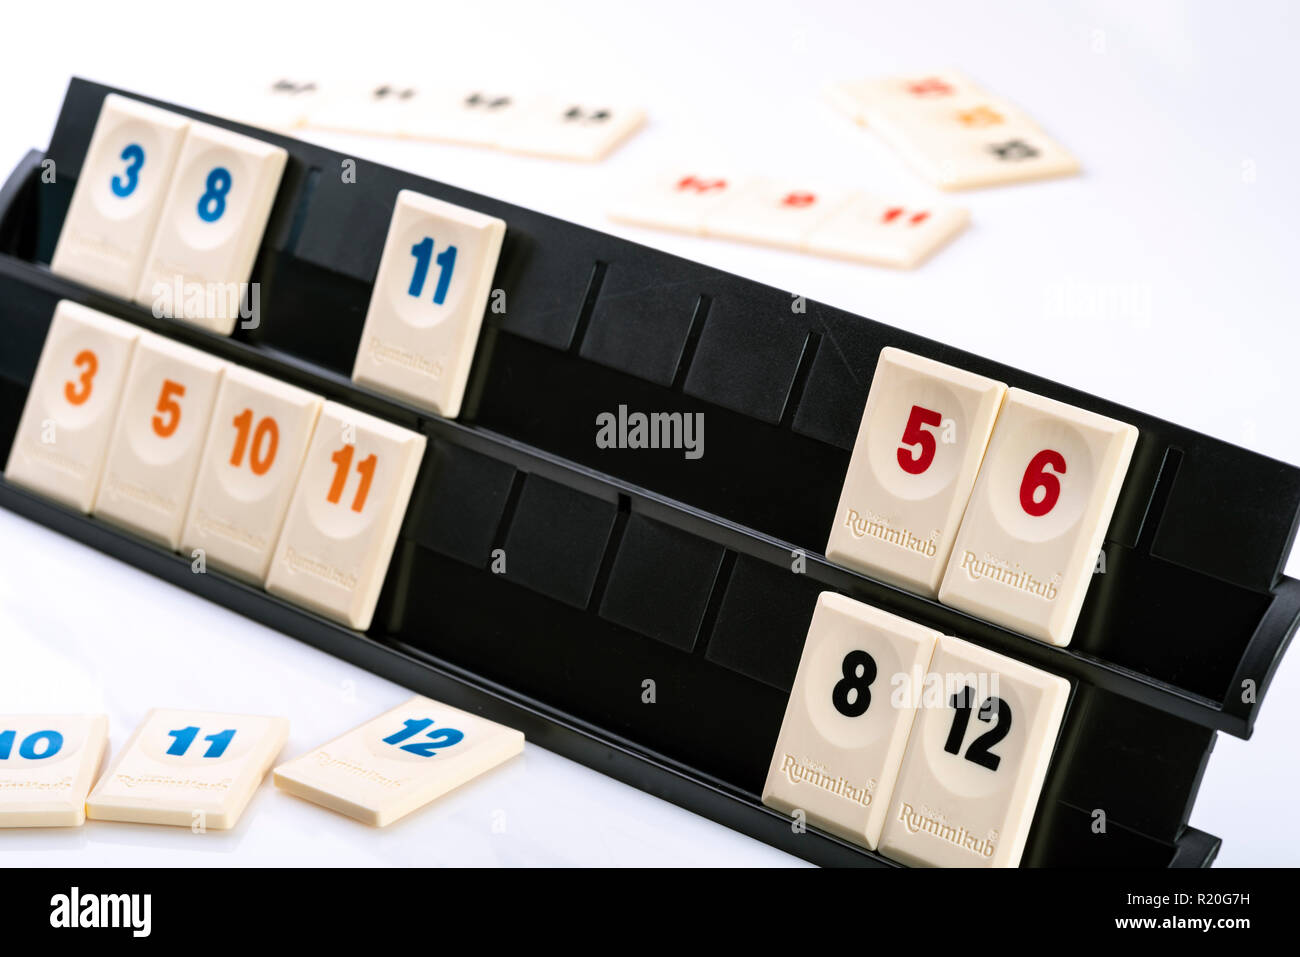 Gameplay Of Rummikub Board Game Stock Photo - Download Image Now